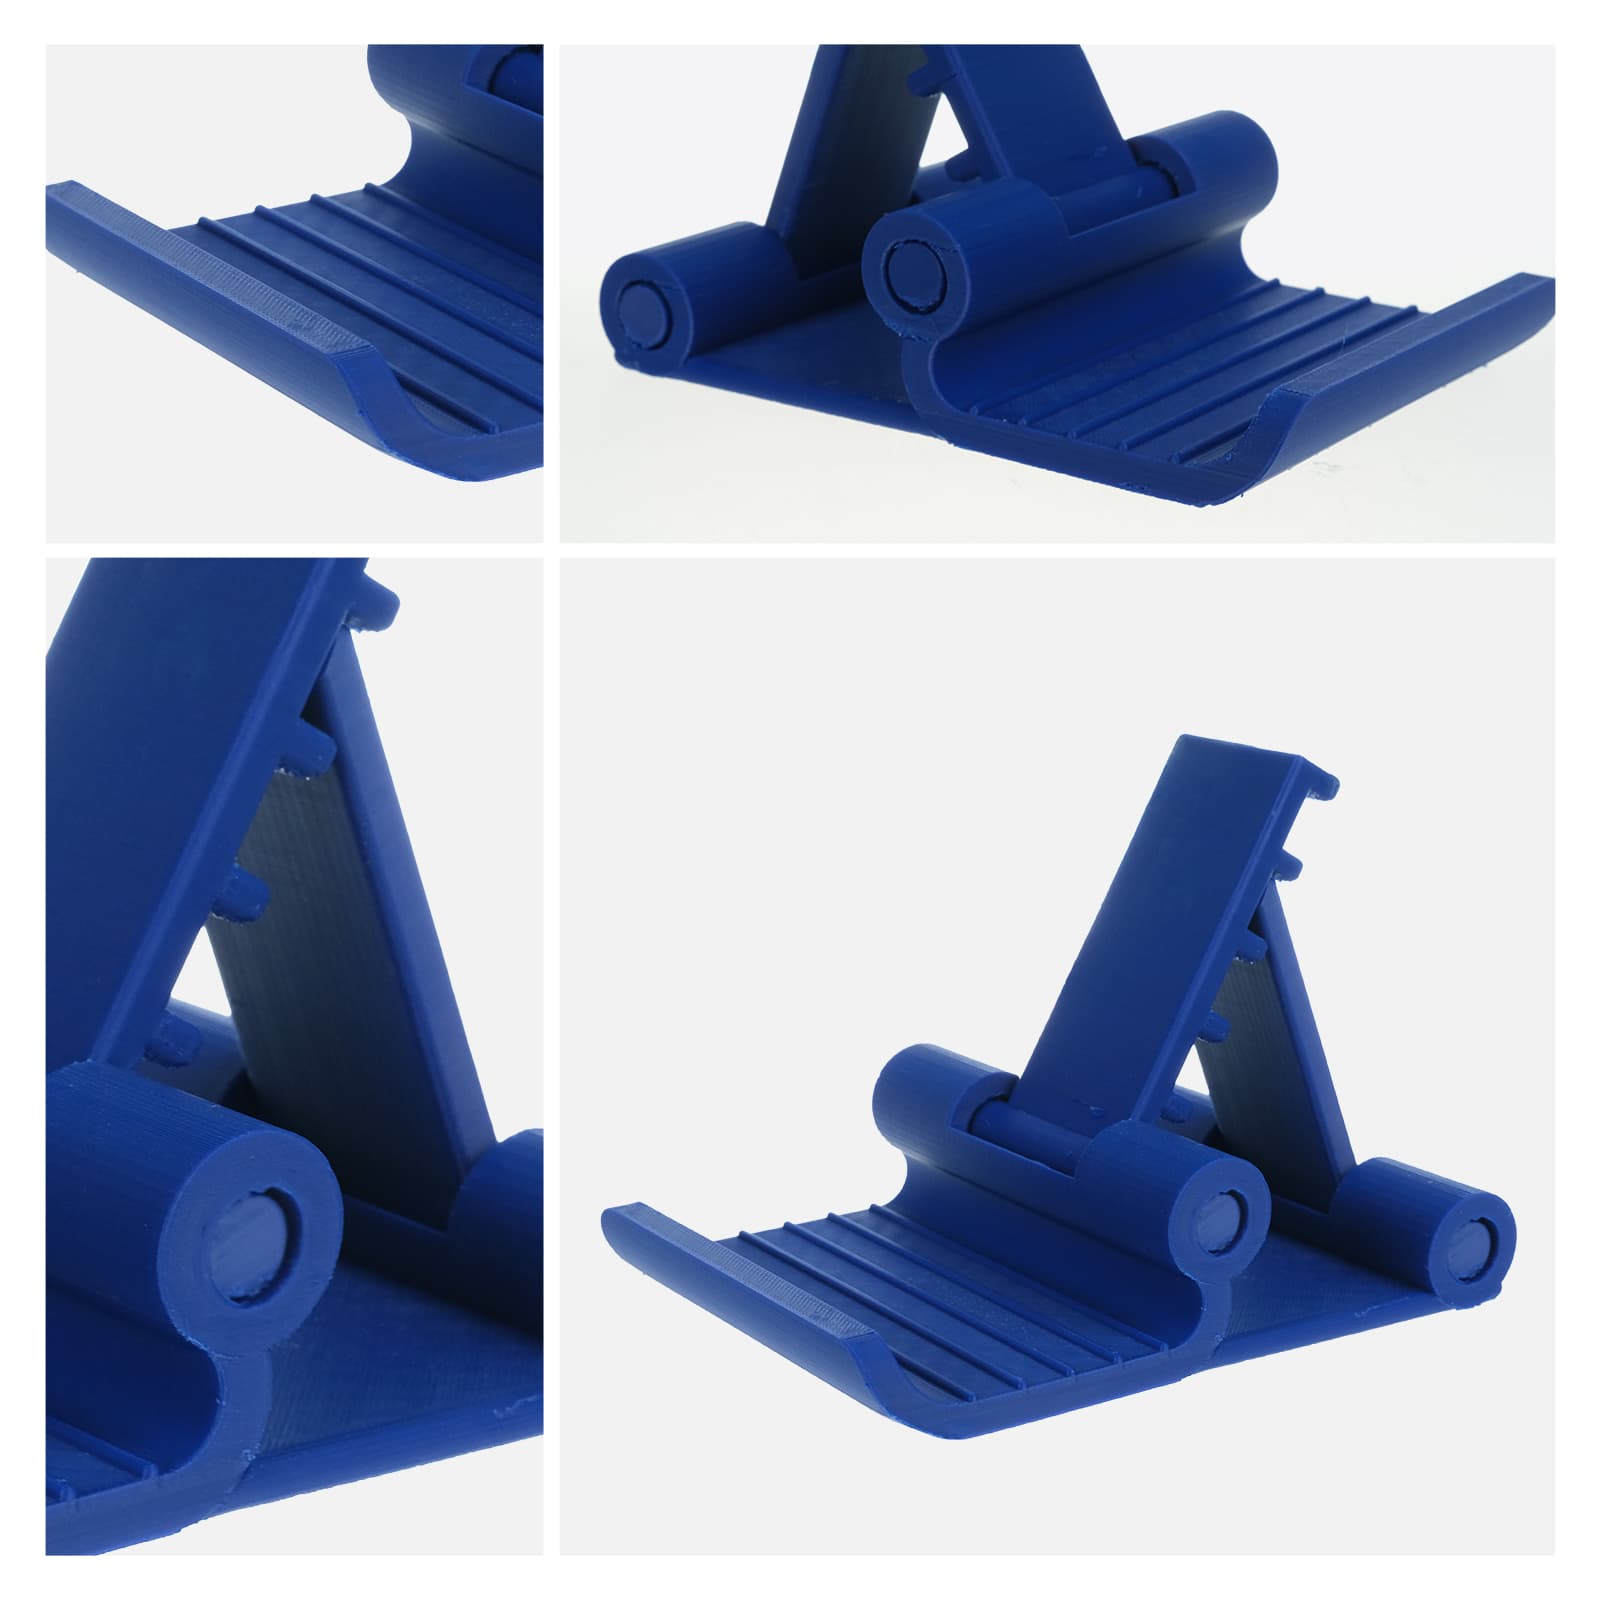 3DHoJor PETG Filament 1.75mm Solid Blue, 3D Printing Filament 1kg Spool(2.2lbs), 3D Filament 1.75mm Dimensional Accuracy +/- 0.03mm Non Tangling Non Clogging Non Stringing,Print with Most 3D Printers…